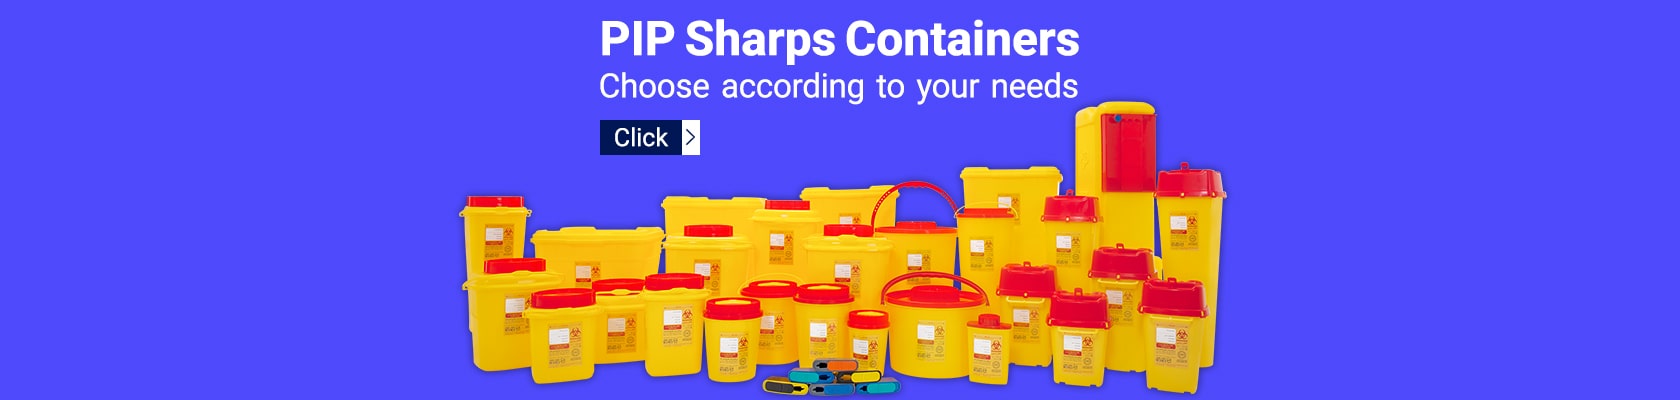 Sharps container banner desktop